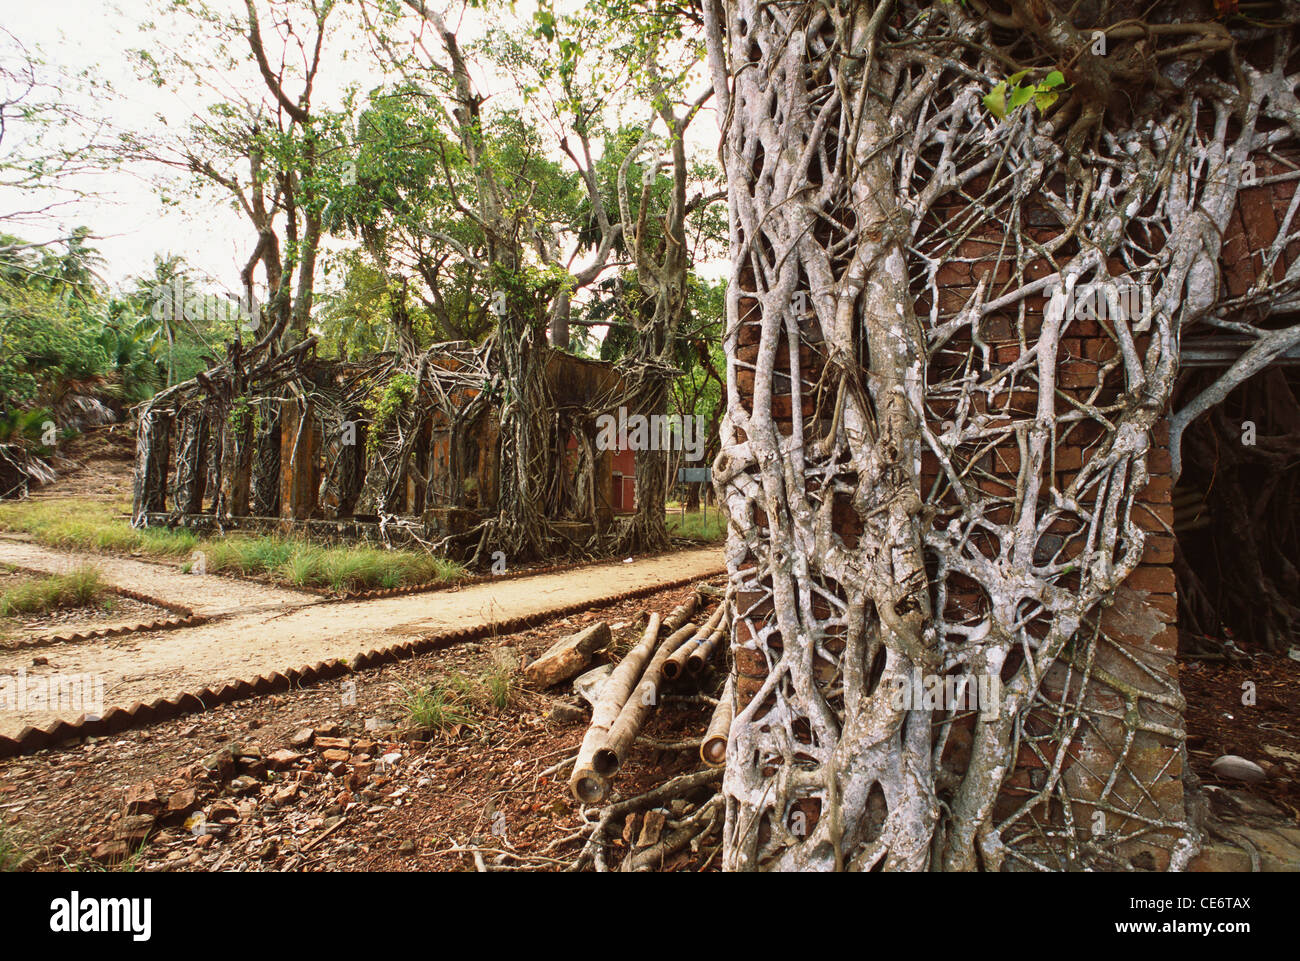 Tree roots growing on brick house ross island andaman and nicobar island india - maa 87970 Stock Photo